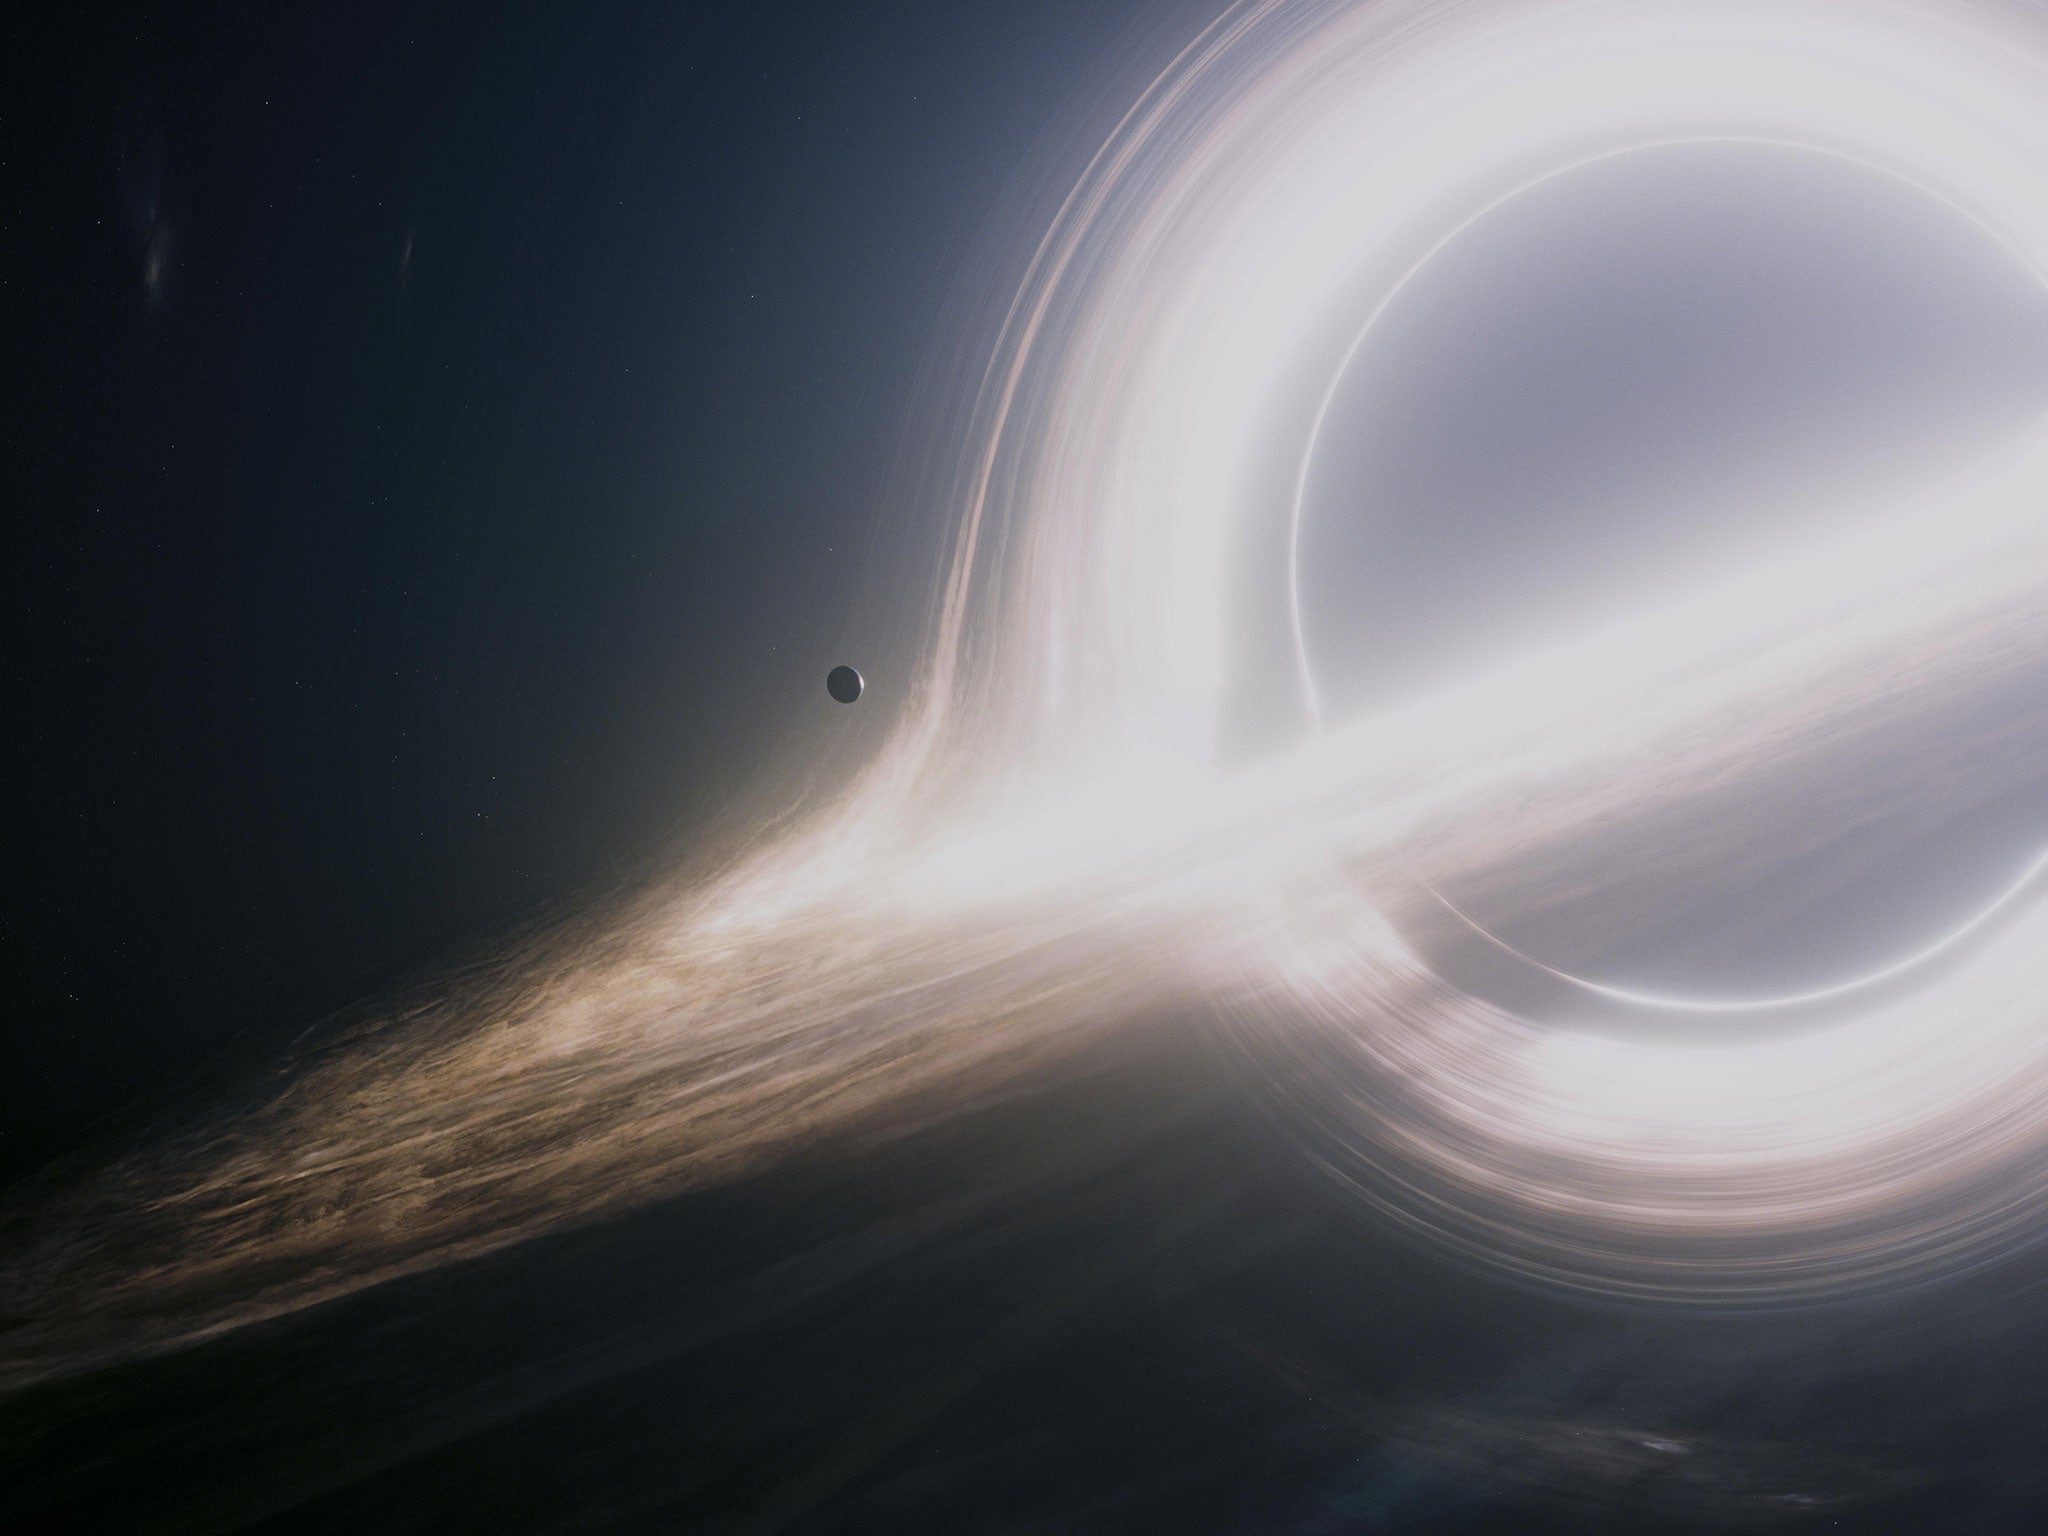 Interstellar won an Oscar and a Bafta for its visuals